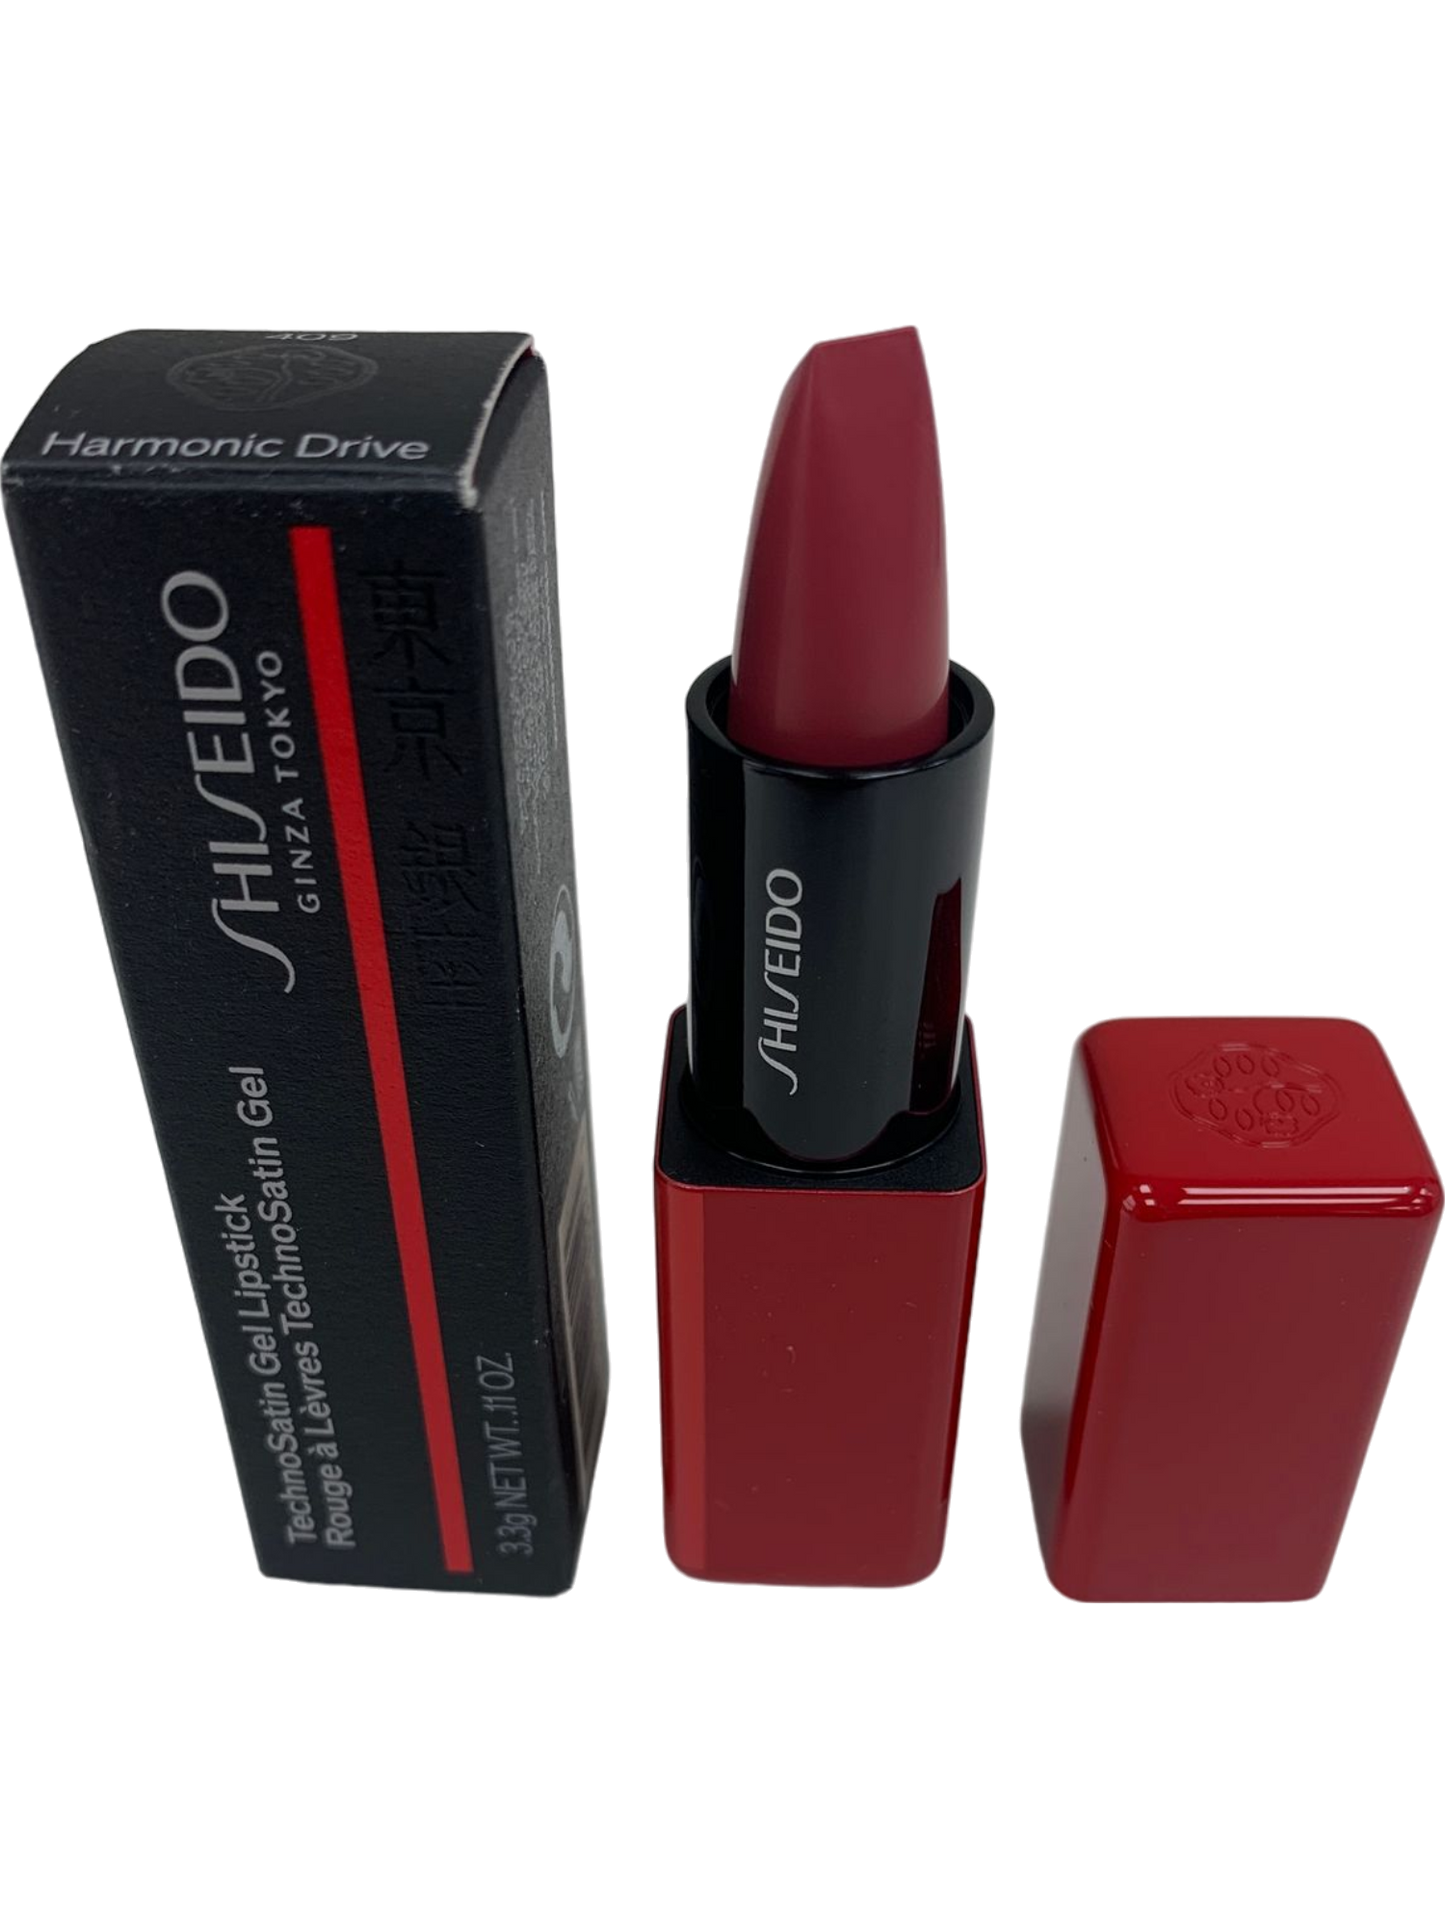 Shiseido TechnoSatin Gel Lipstick 409 Harmonic Drive Satin Finish Hydrating Red